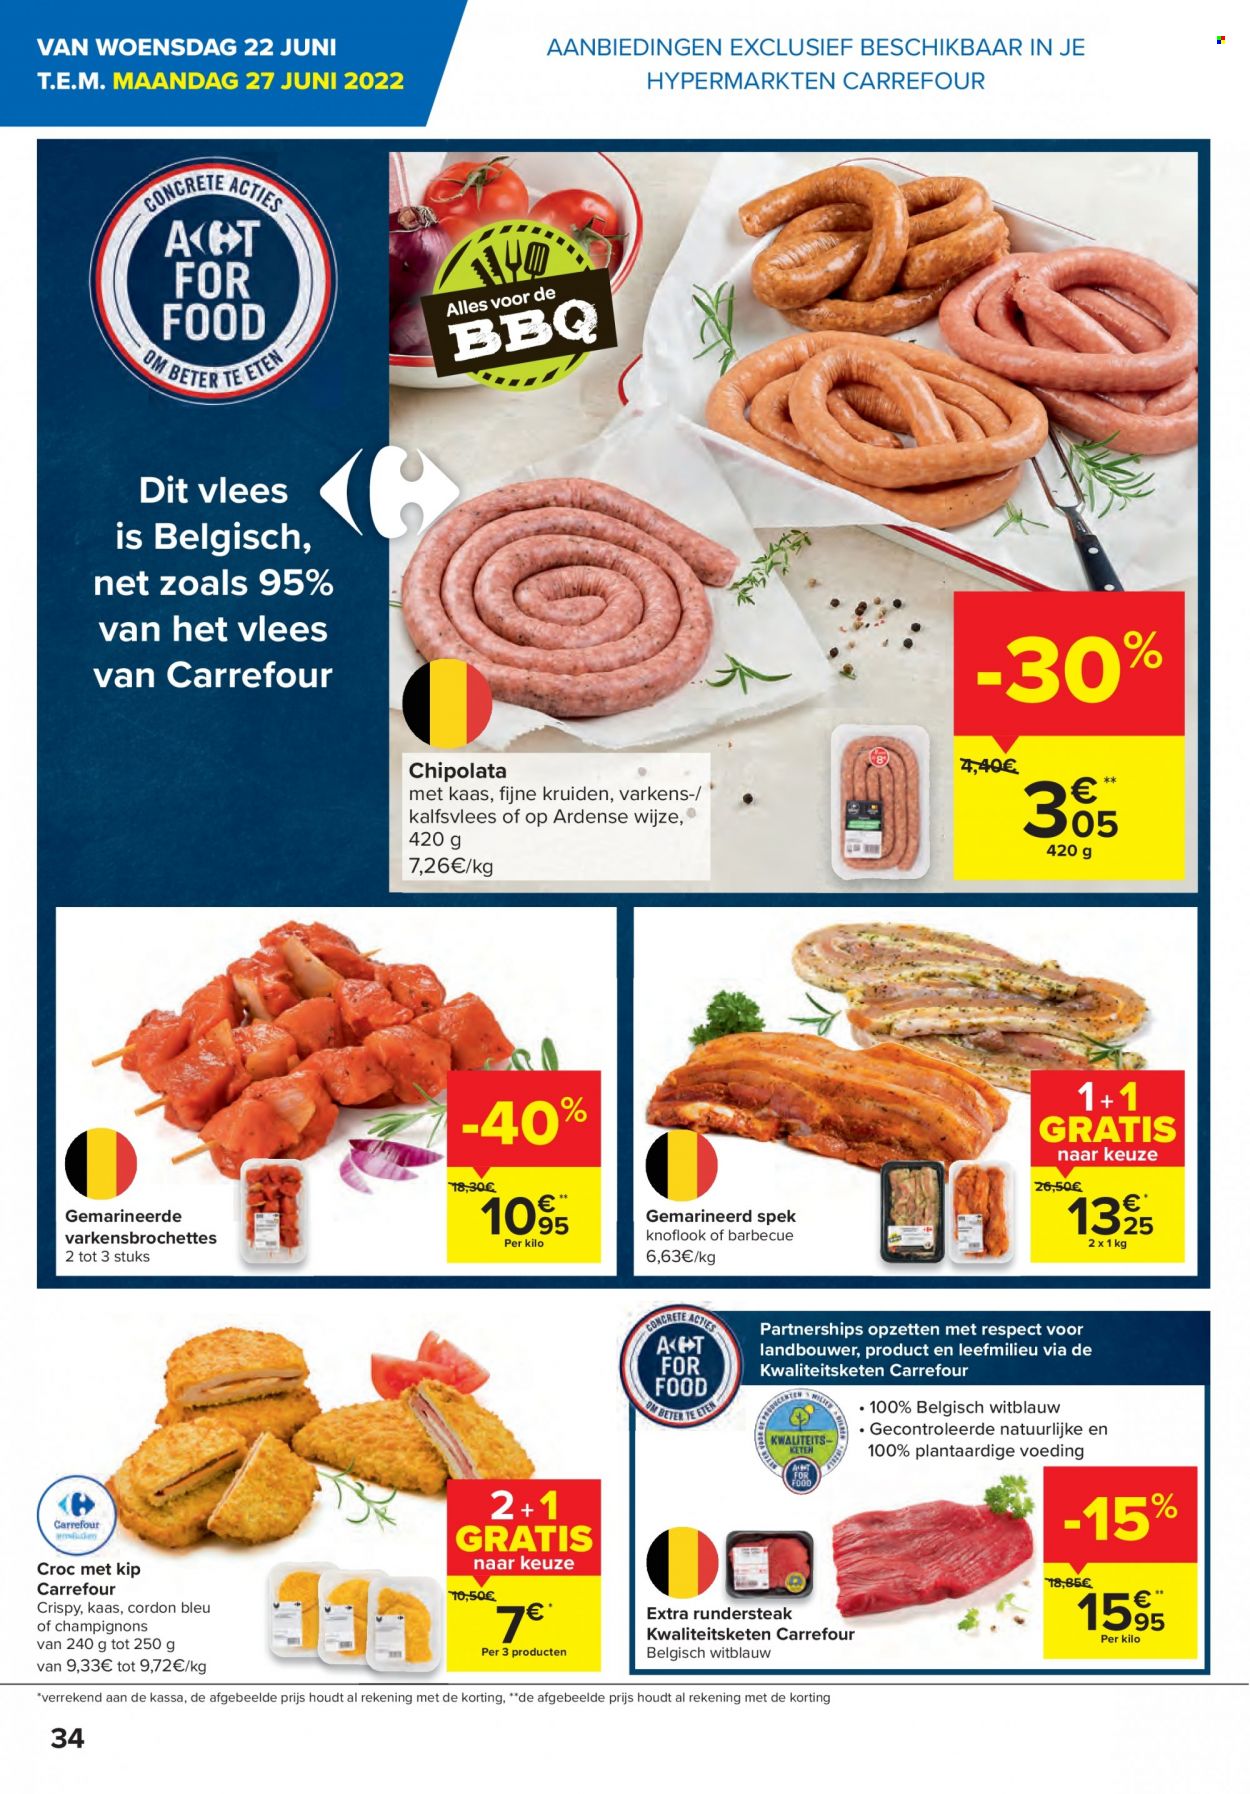 thumbnail - Catalogue Carrefour hypermarkt - 22/06/2022 - 04/07/2022 - Produits soldés - champignon, cordon bleu, chipolata, barbecue. Page 34.